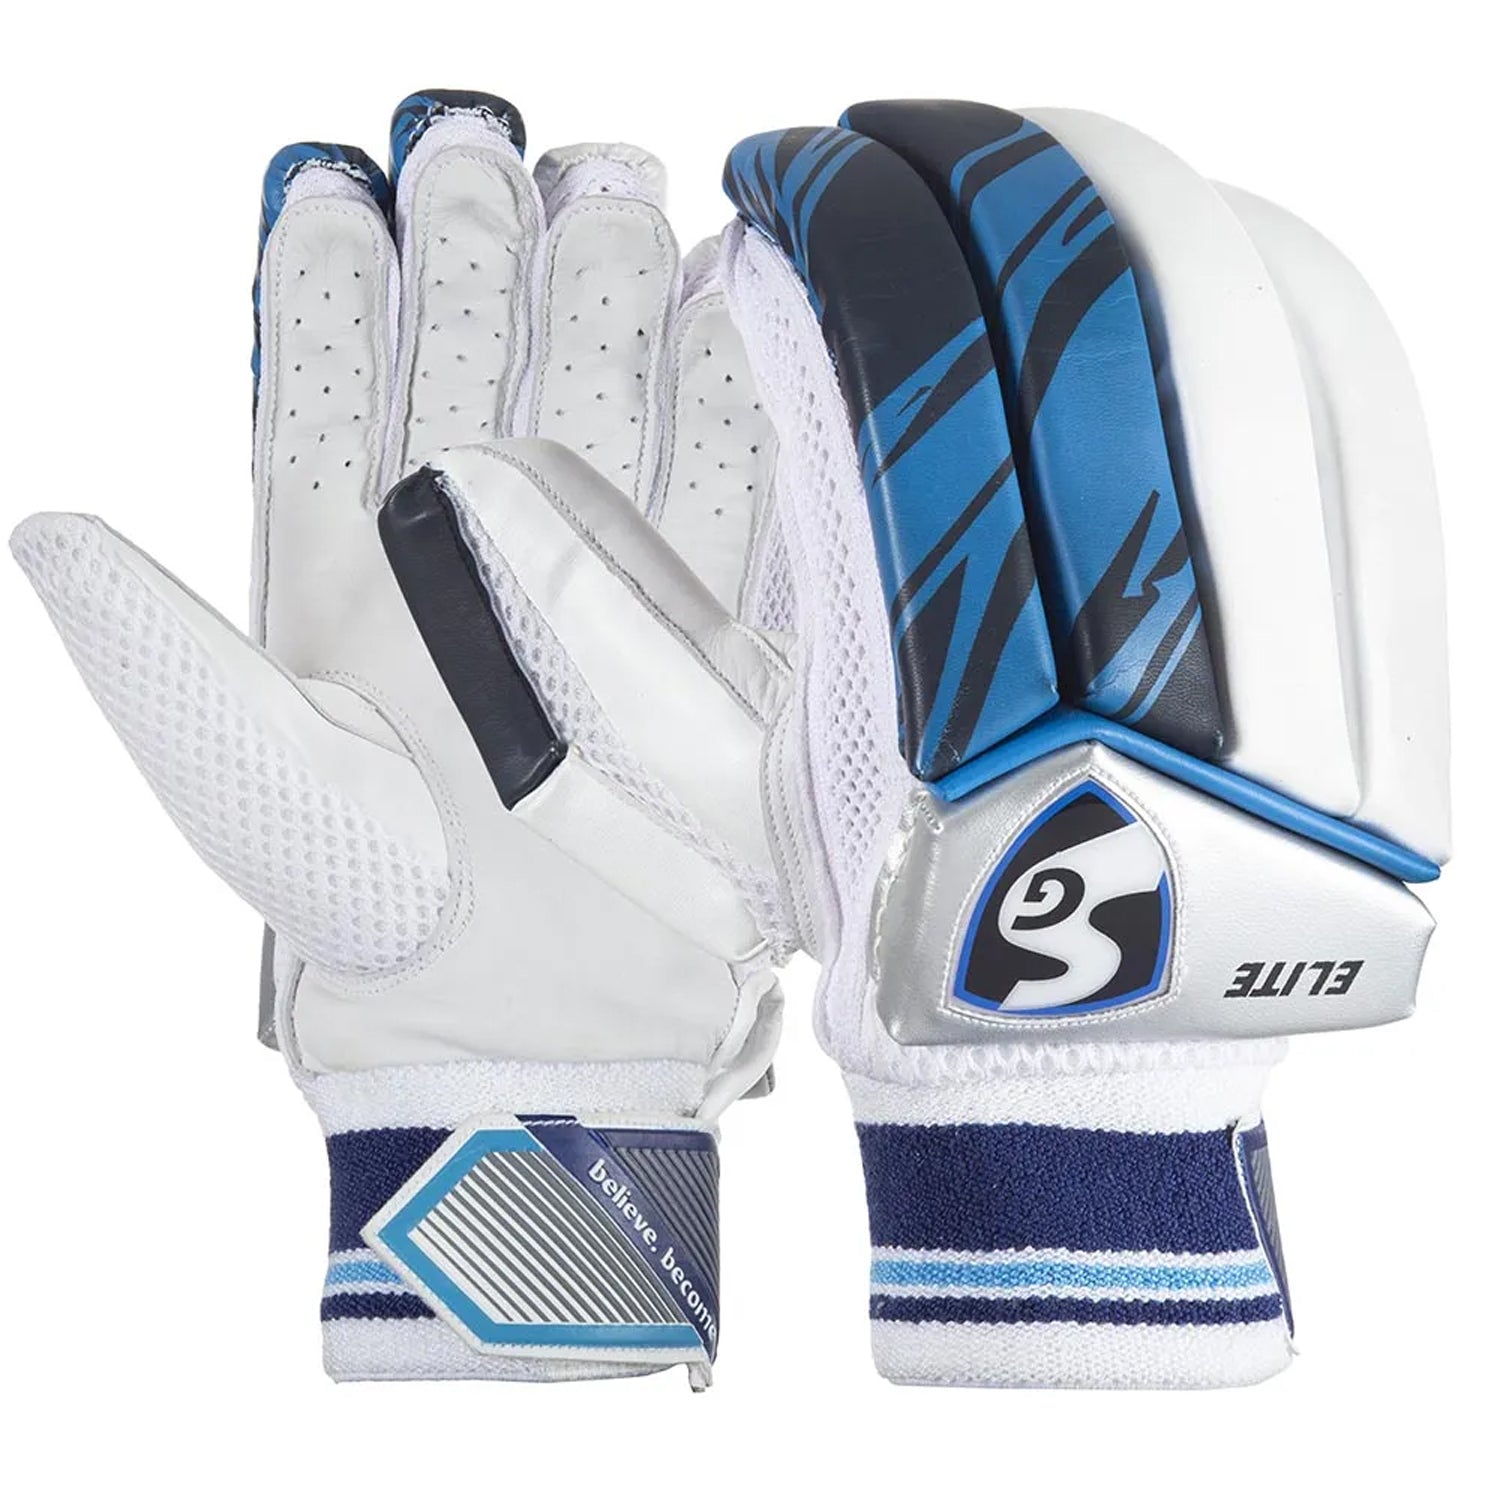 SG Elite Batting Gloves - Left Hand - Best Price online Prokicksports.com